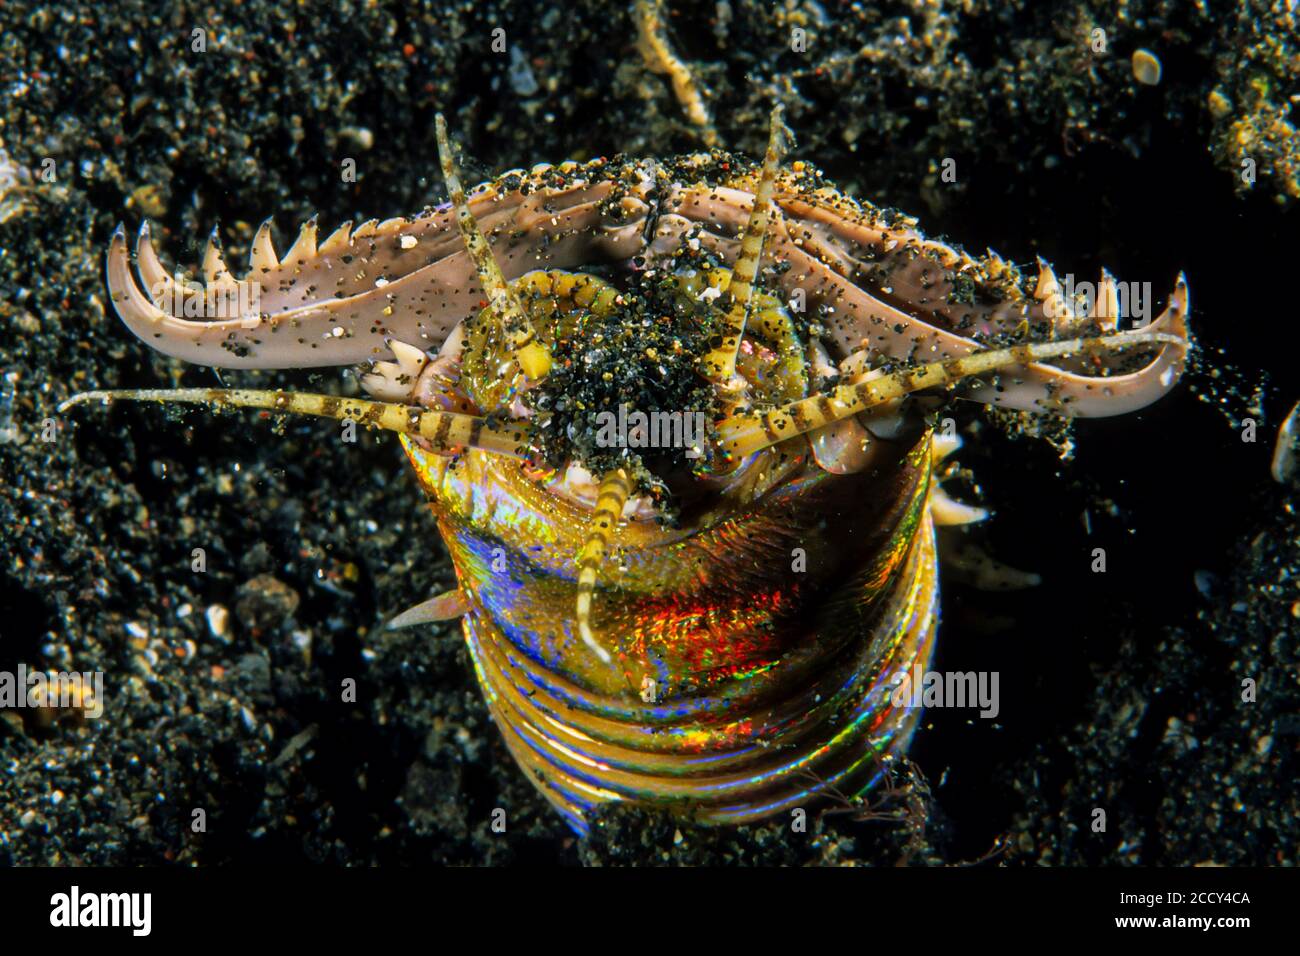 Bobbit worm, (Eunice aphroditois), Lembeh Strait, Indopacific, Indonesia Stock Photo